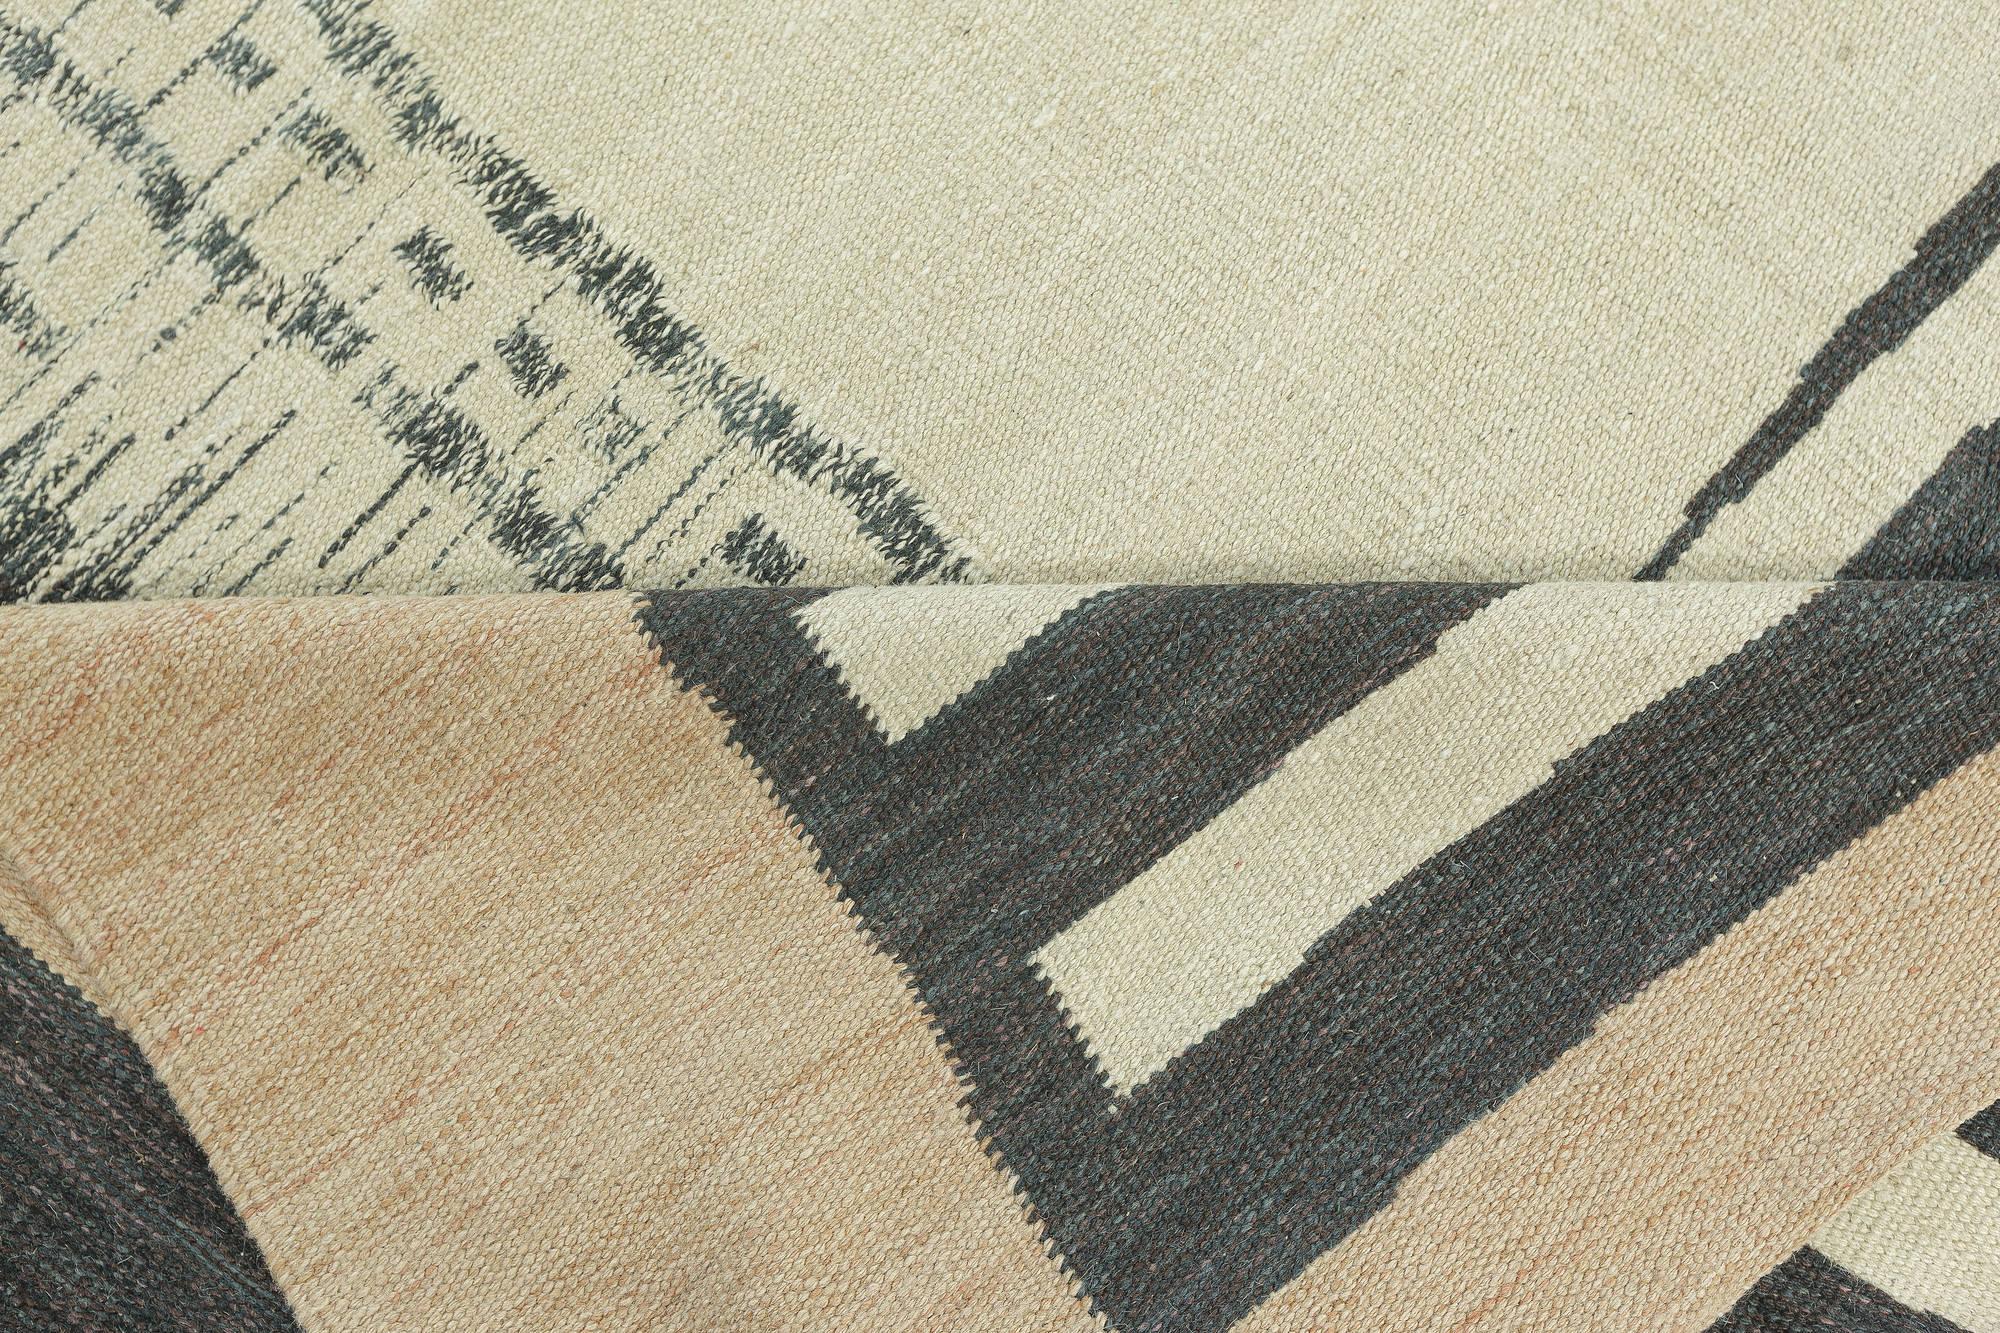 Large Modern geometric flat-weave rug by Doris Leslie Blau
Size: 14'5